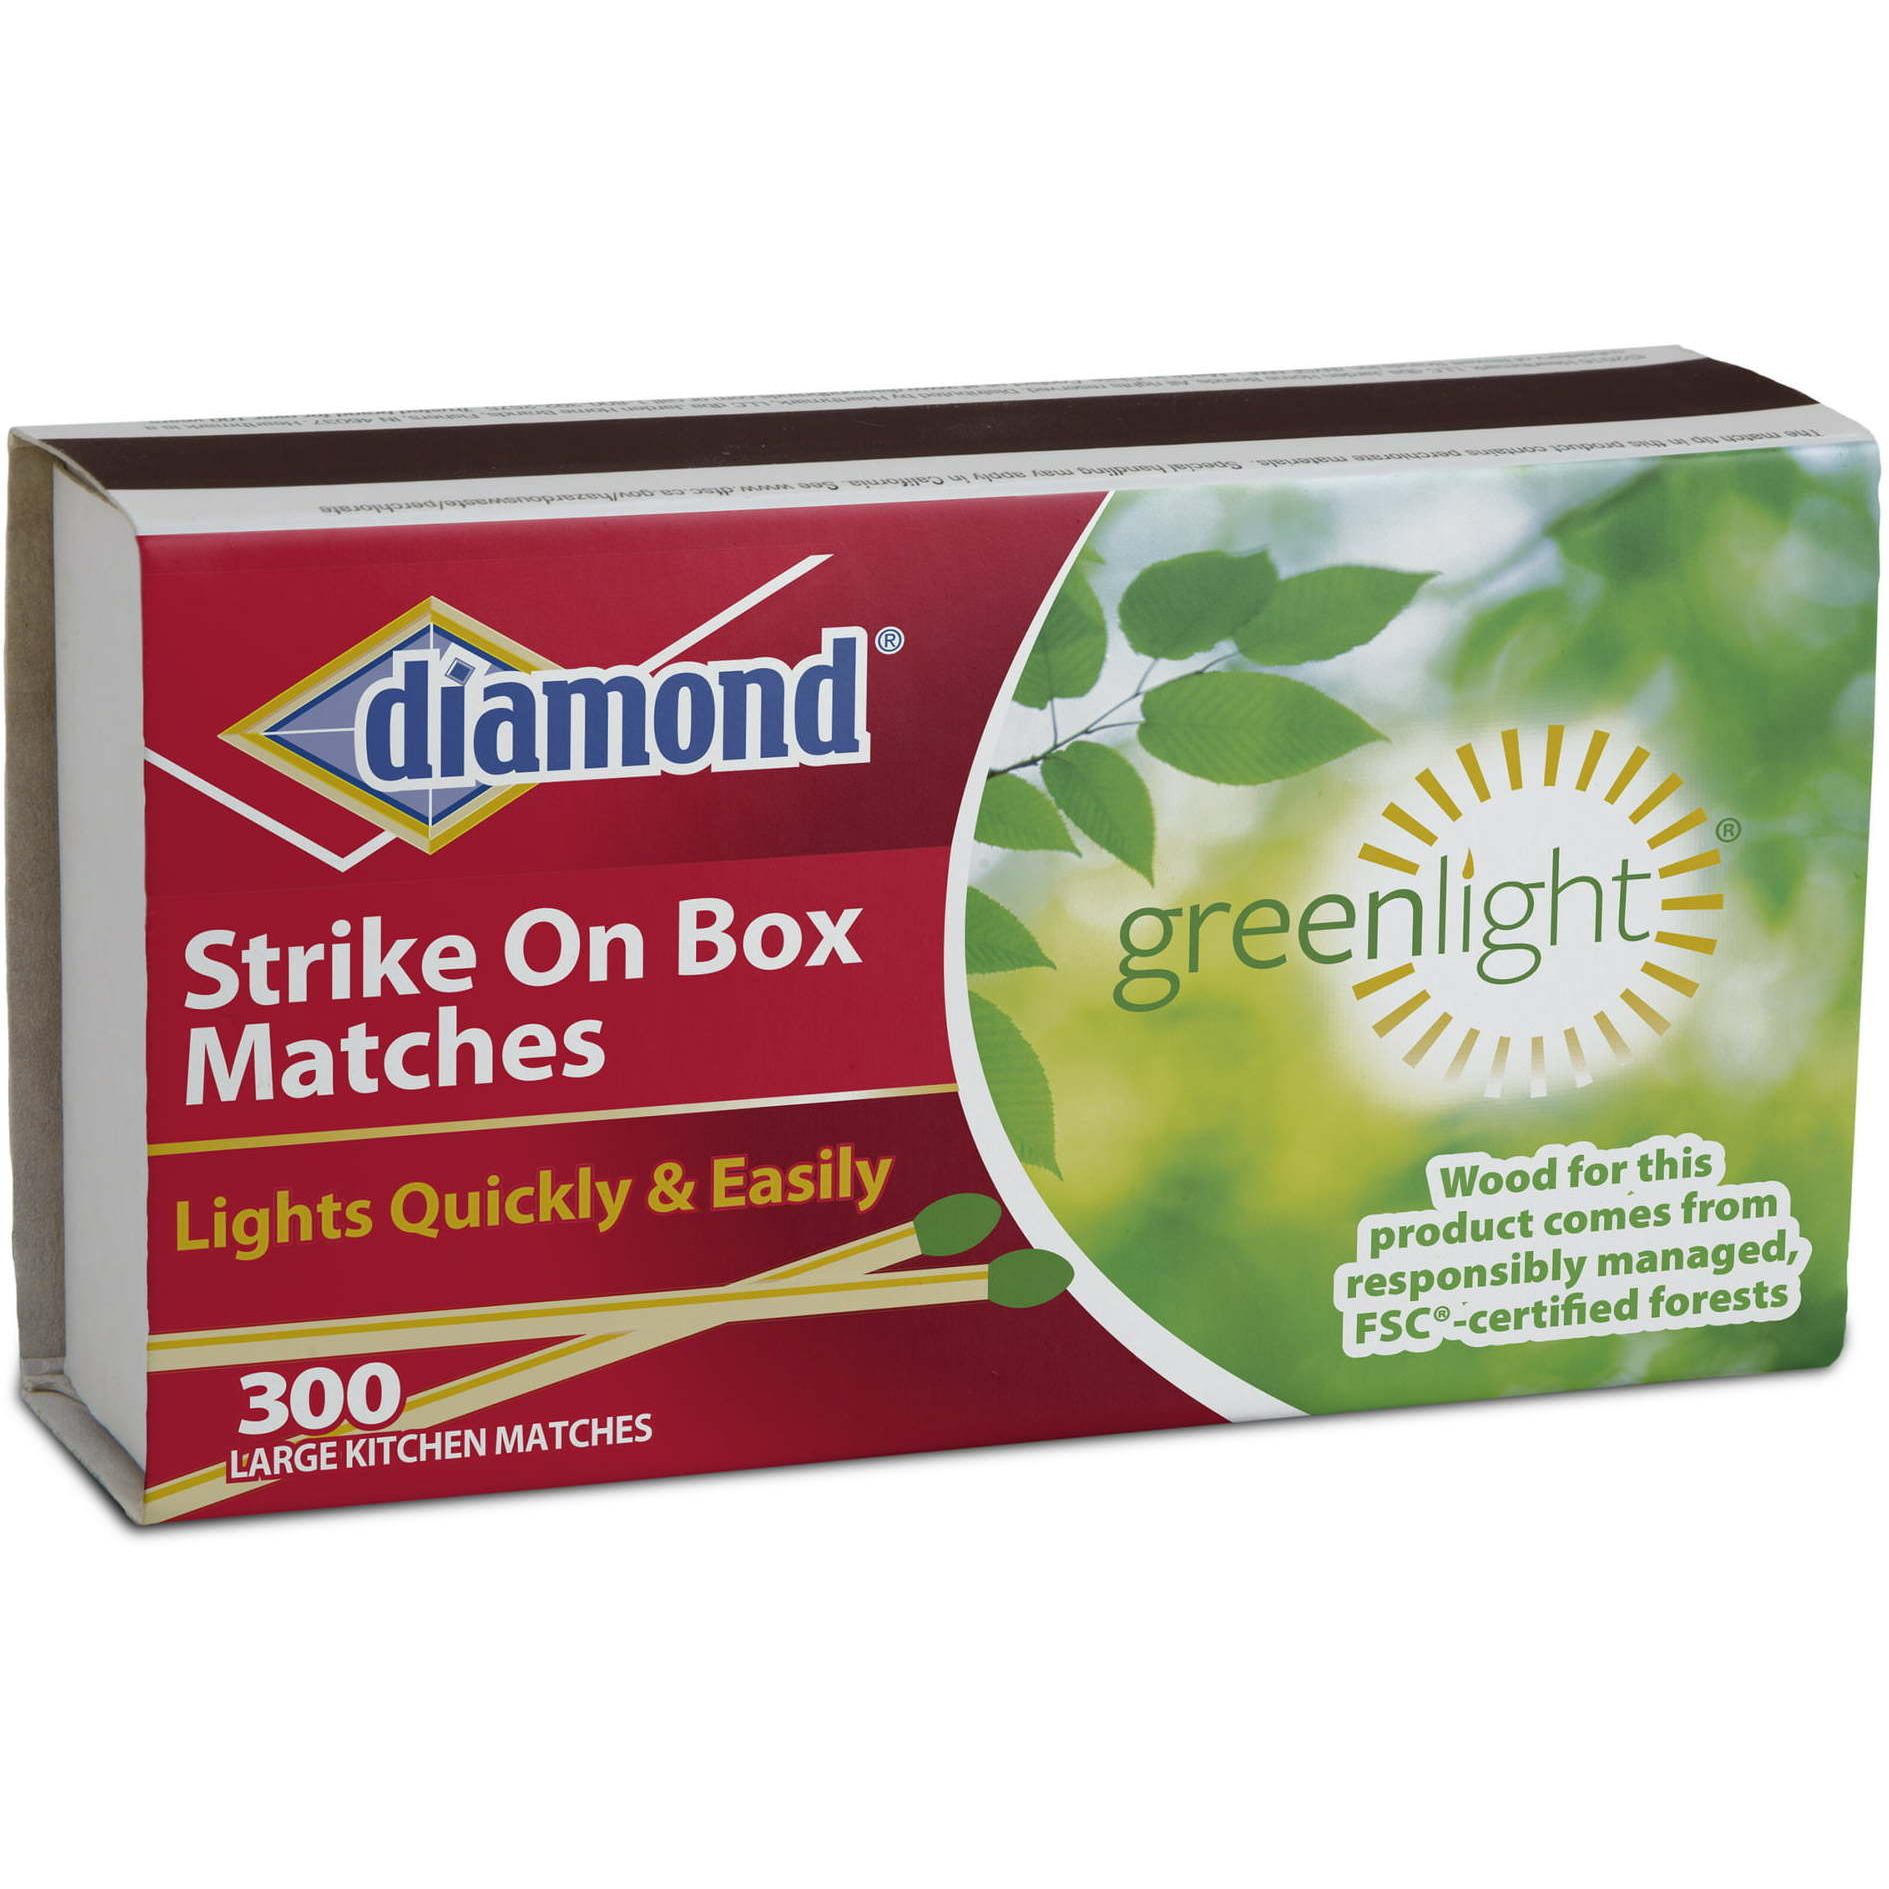 Diamond Green Light Wooden Match, Strike On Box - 300 Count